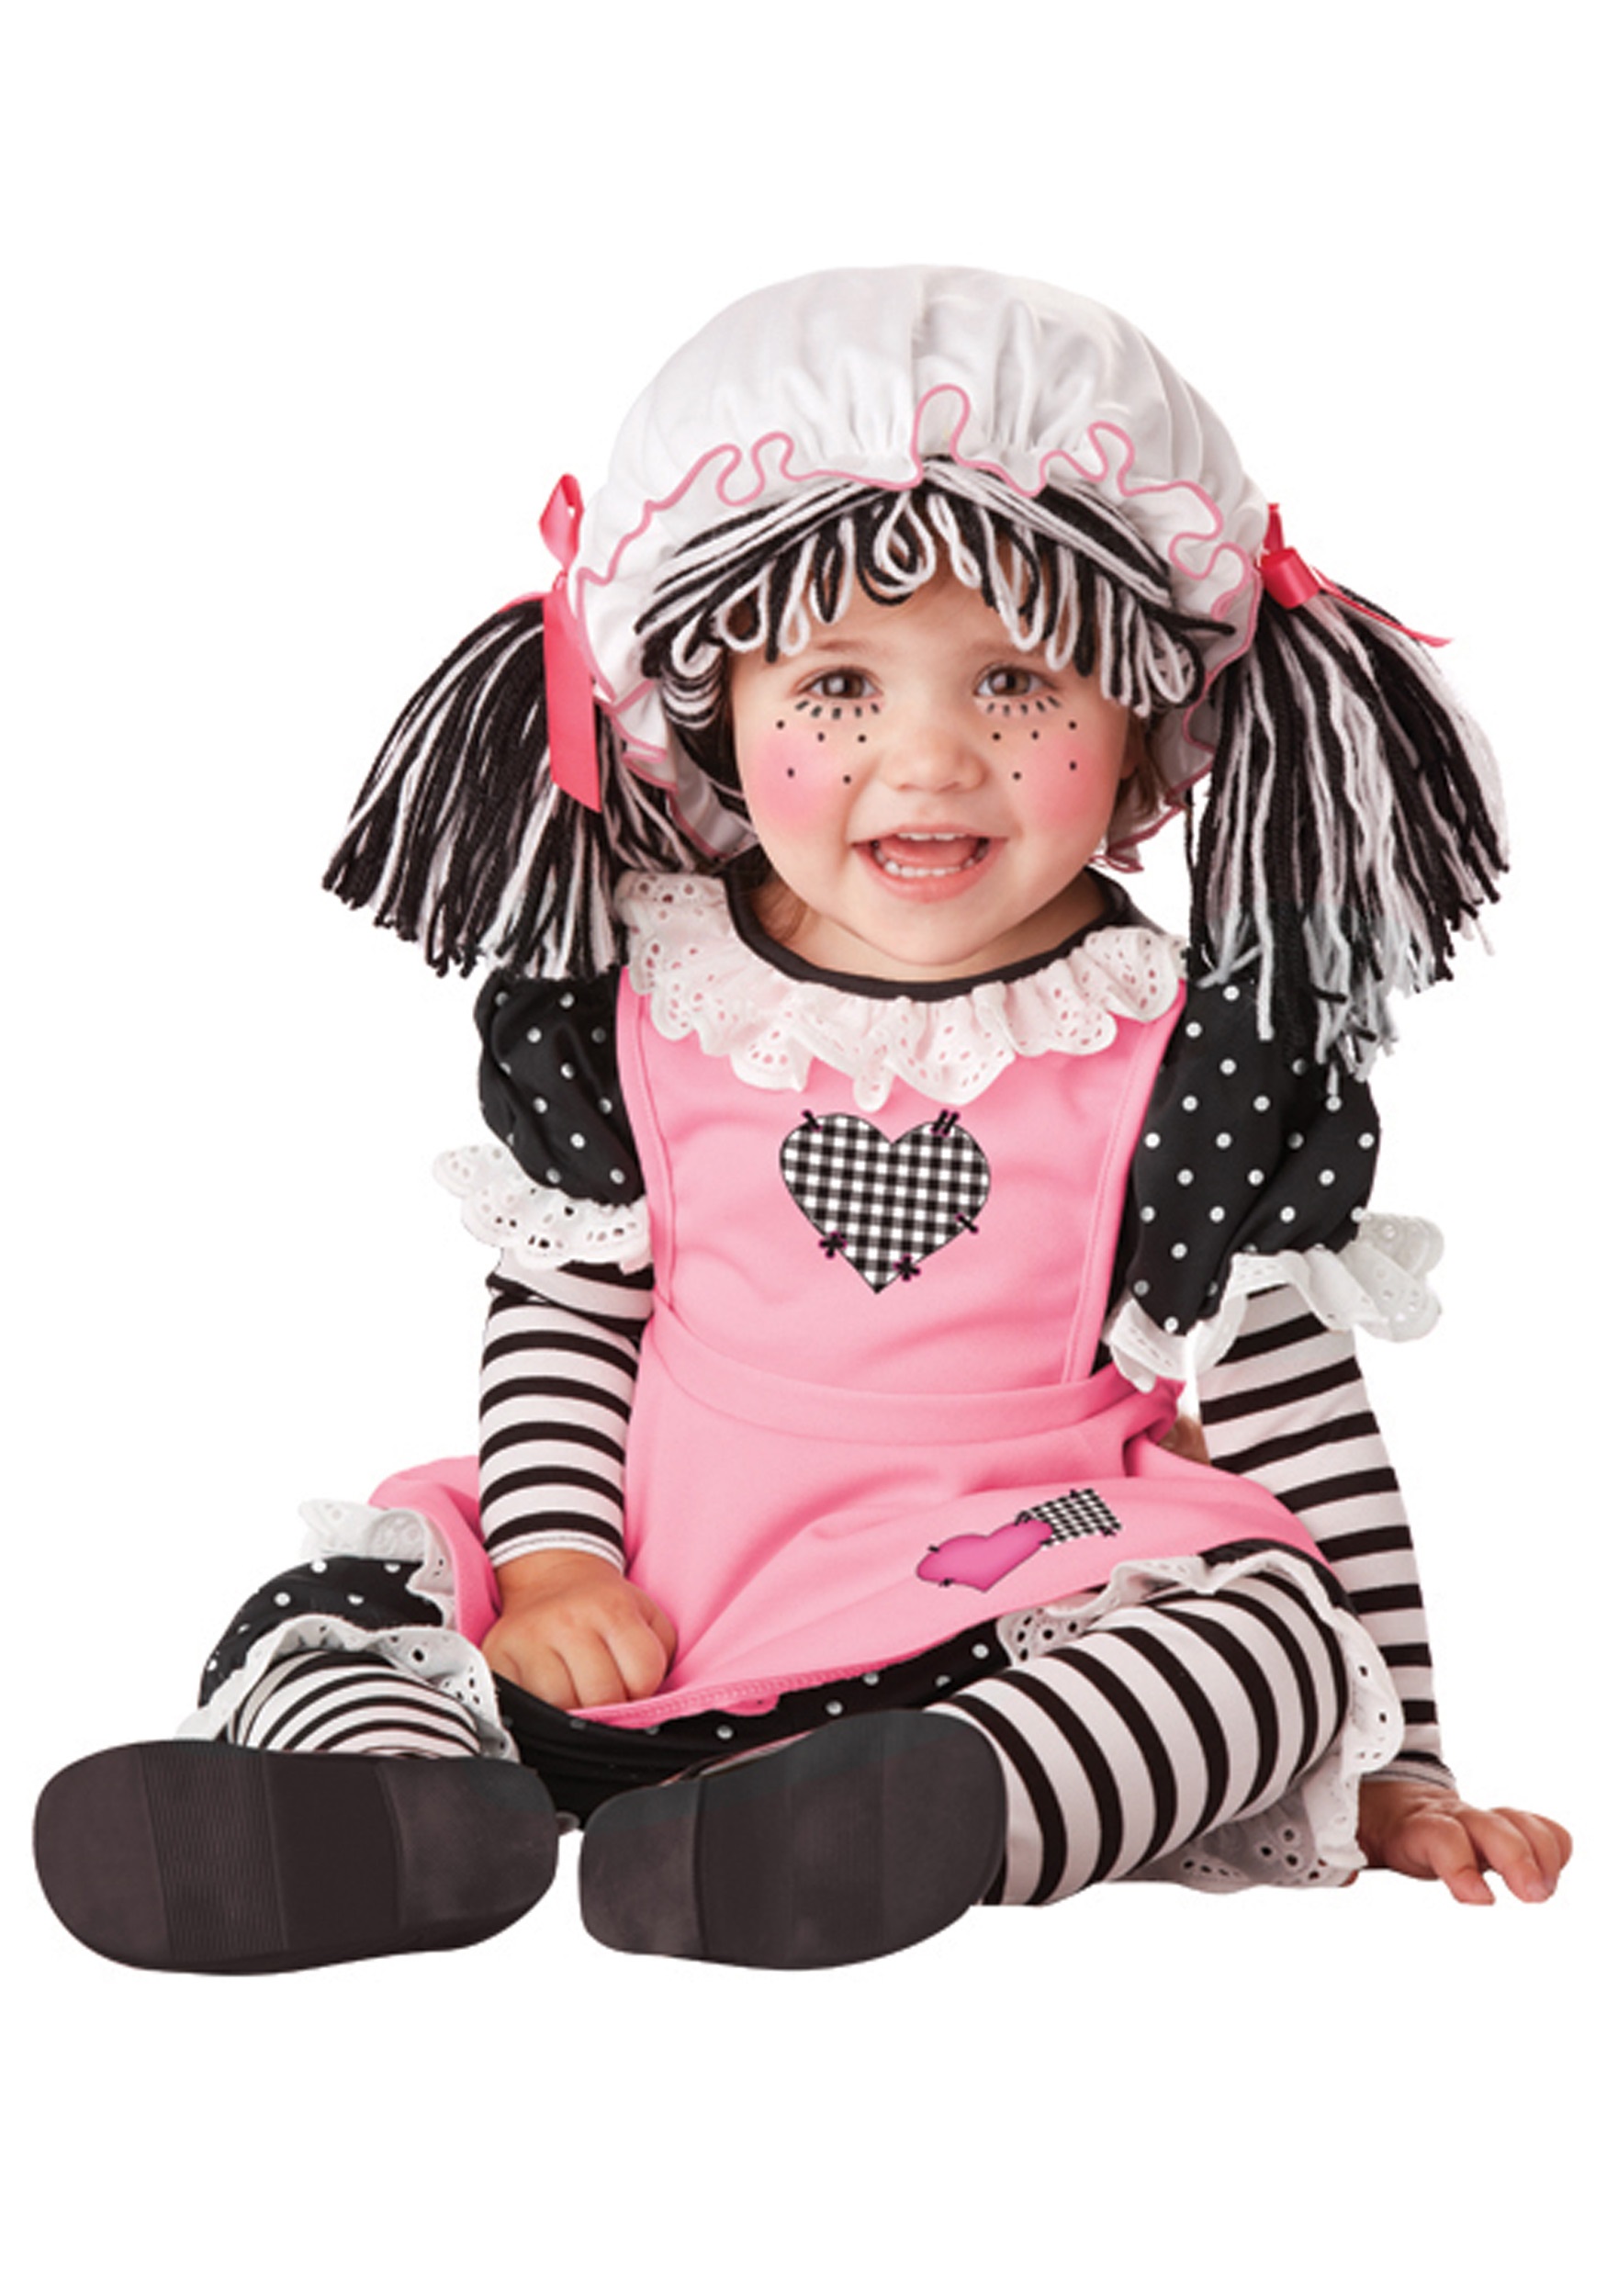 Baby Rag Doll Costume for Kids